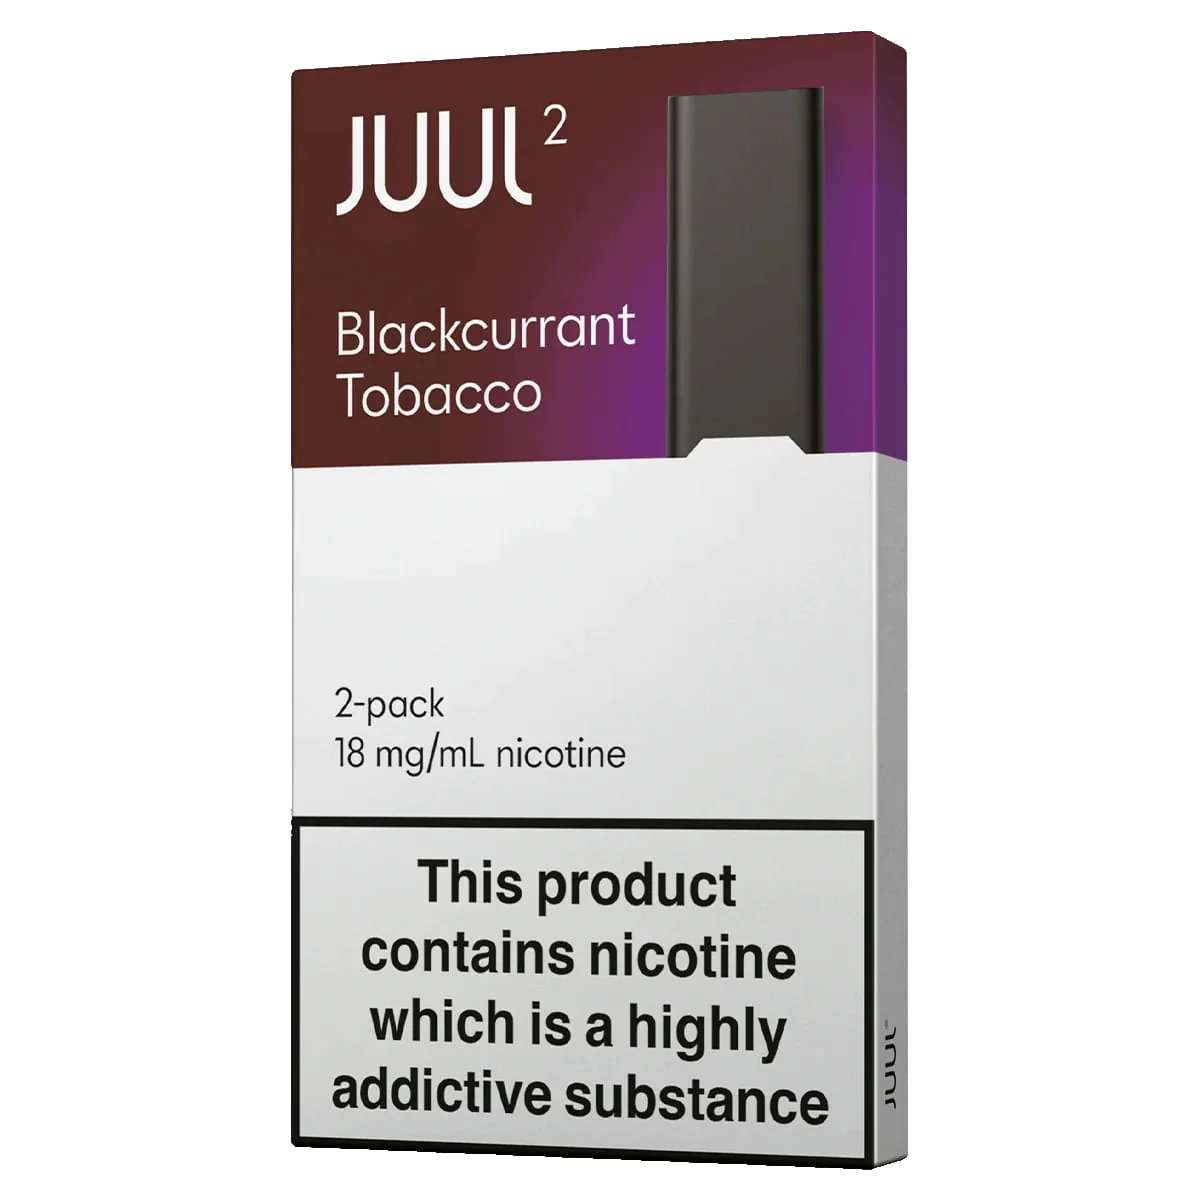 JUUL2 Blackcurrant Tobacco Pods (2 Pods)